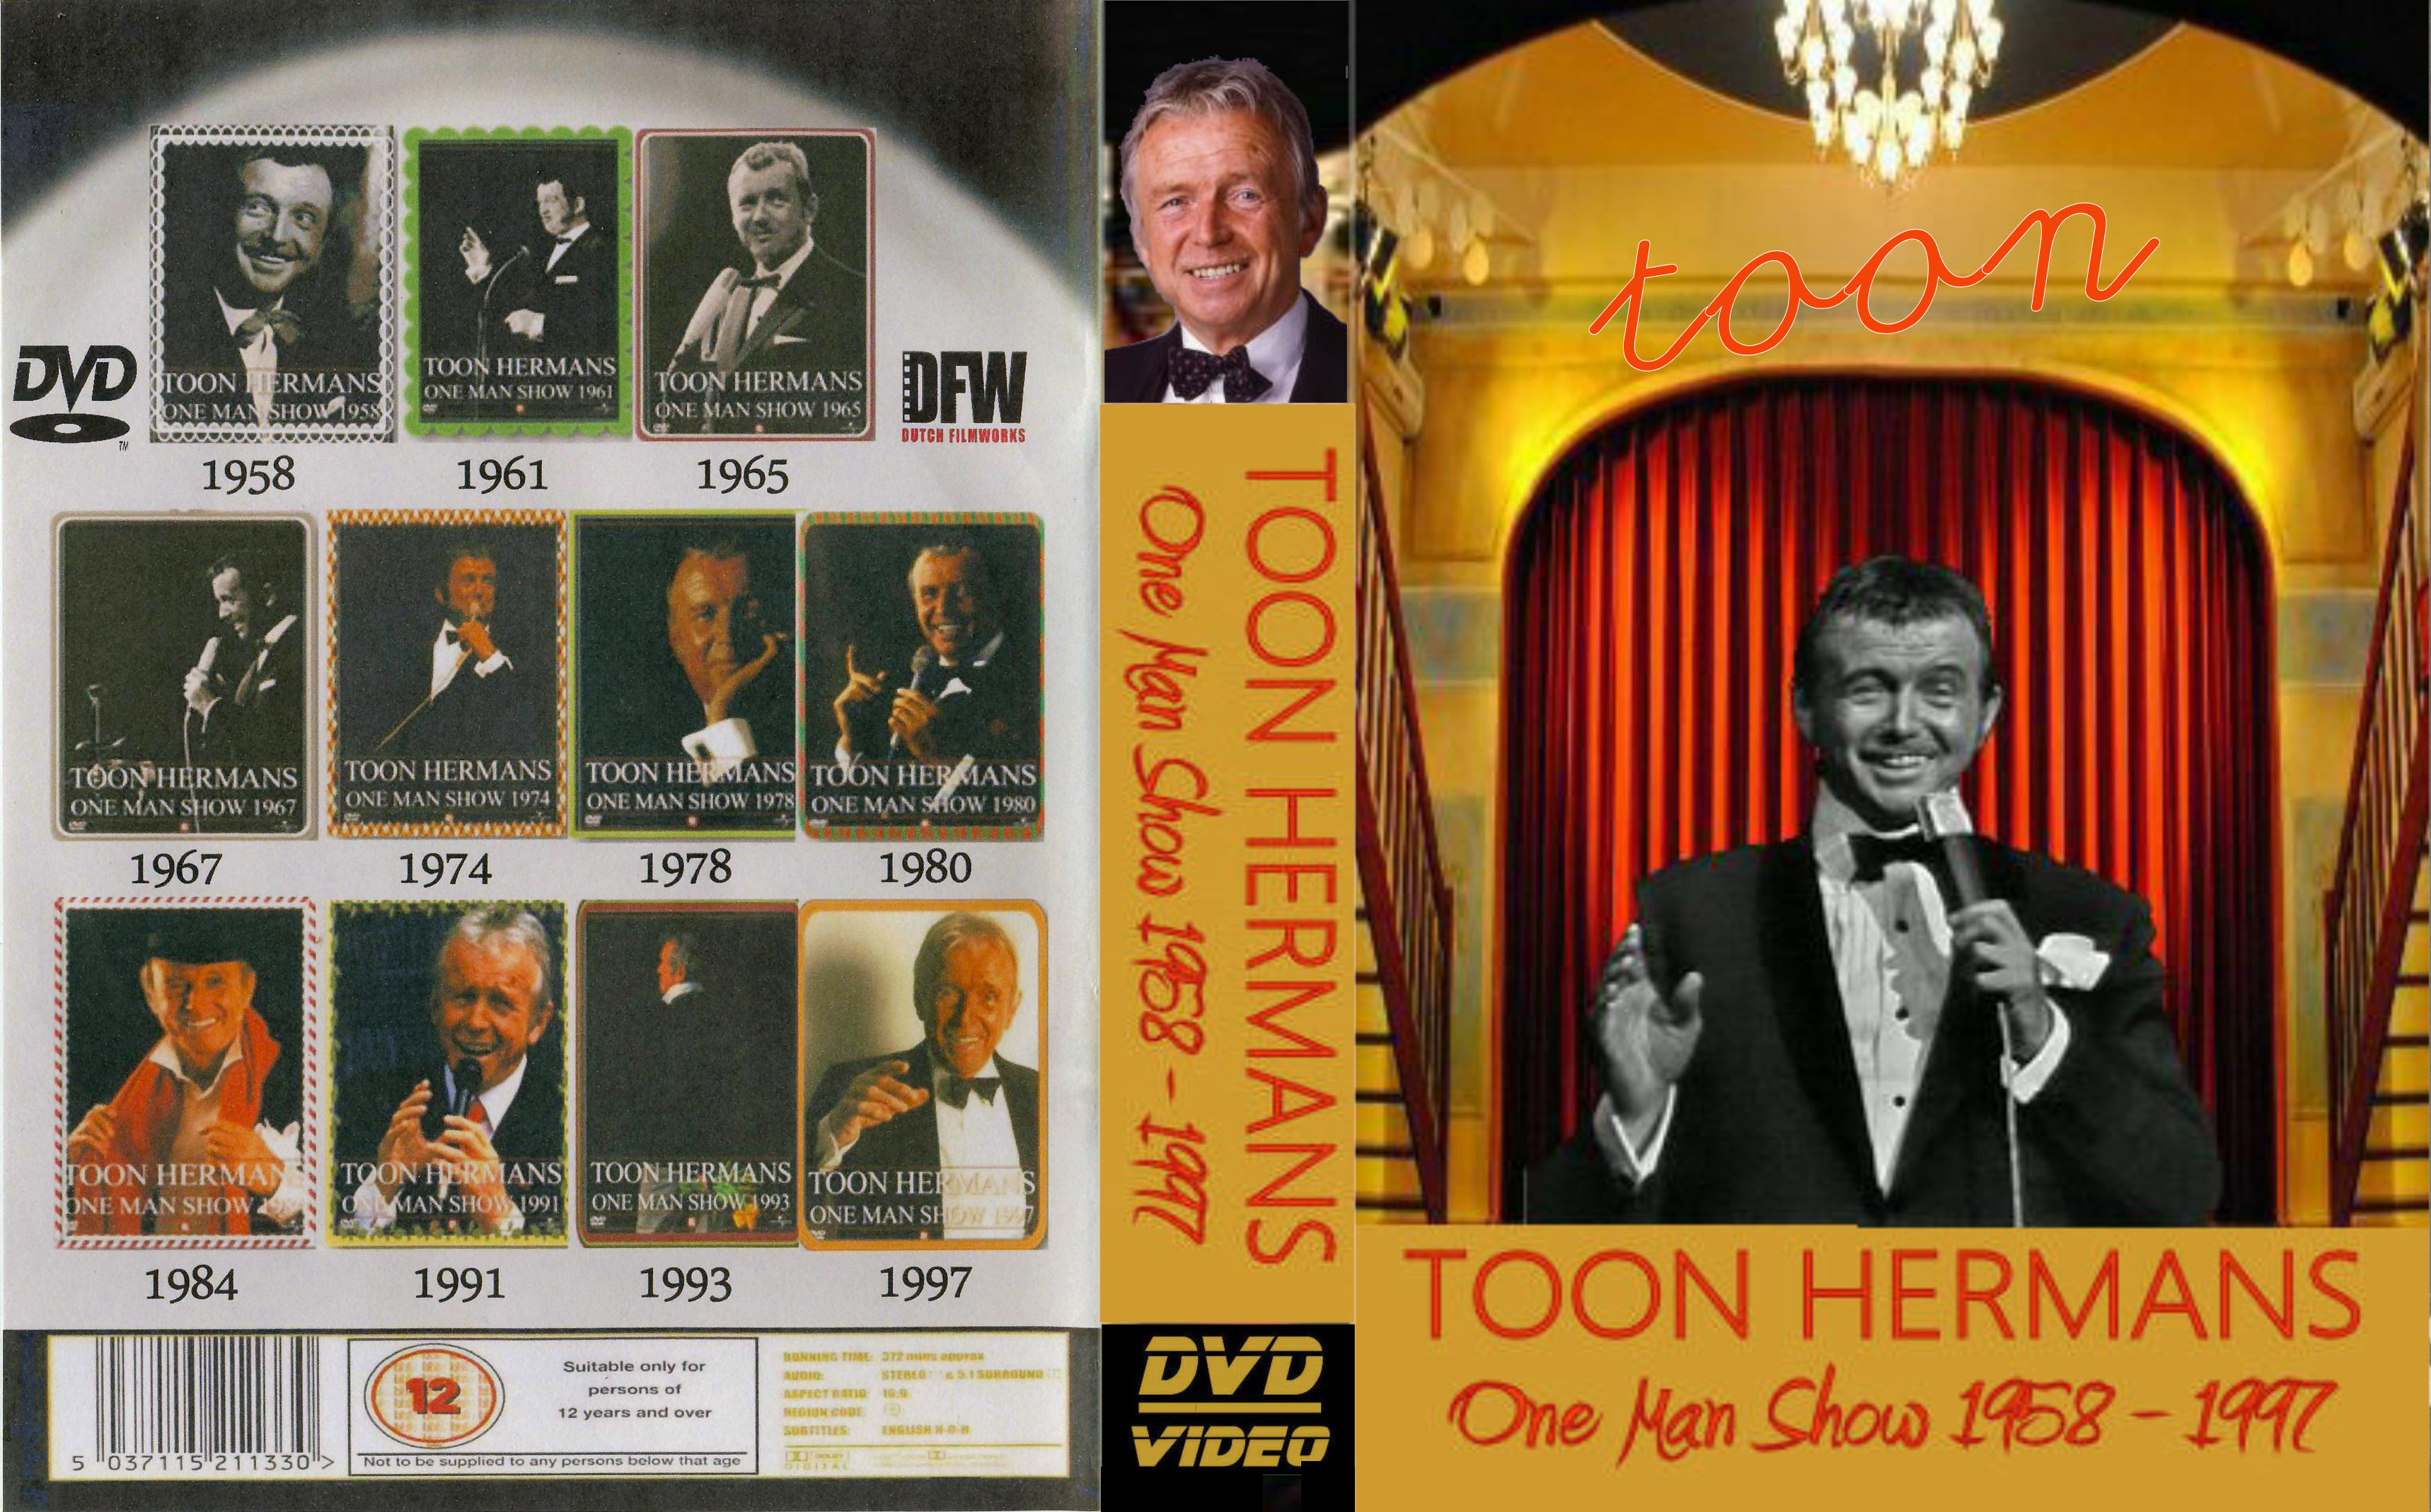 Toon Hermans One Man Show 1958 - 1997 - DvD 10 (1993)